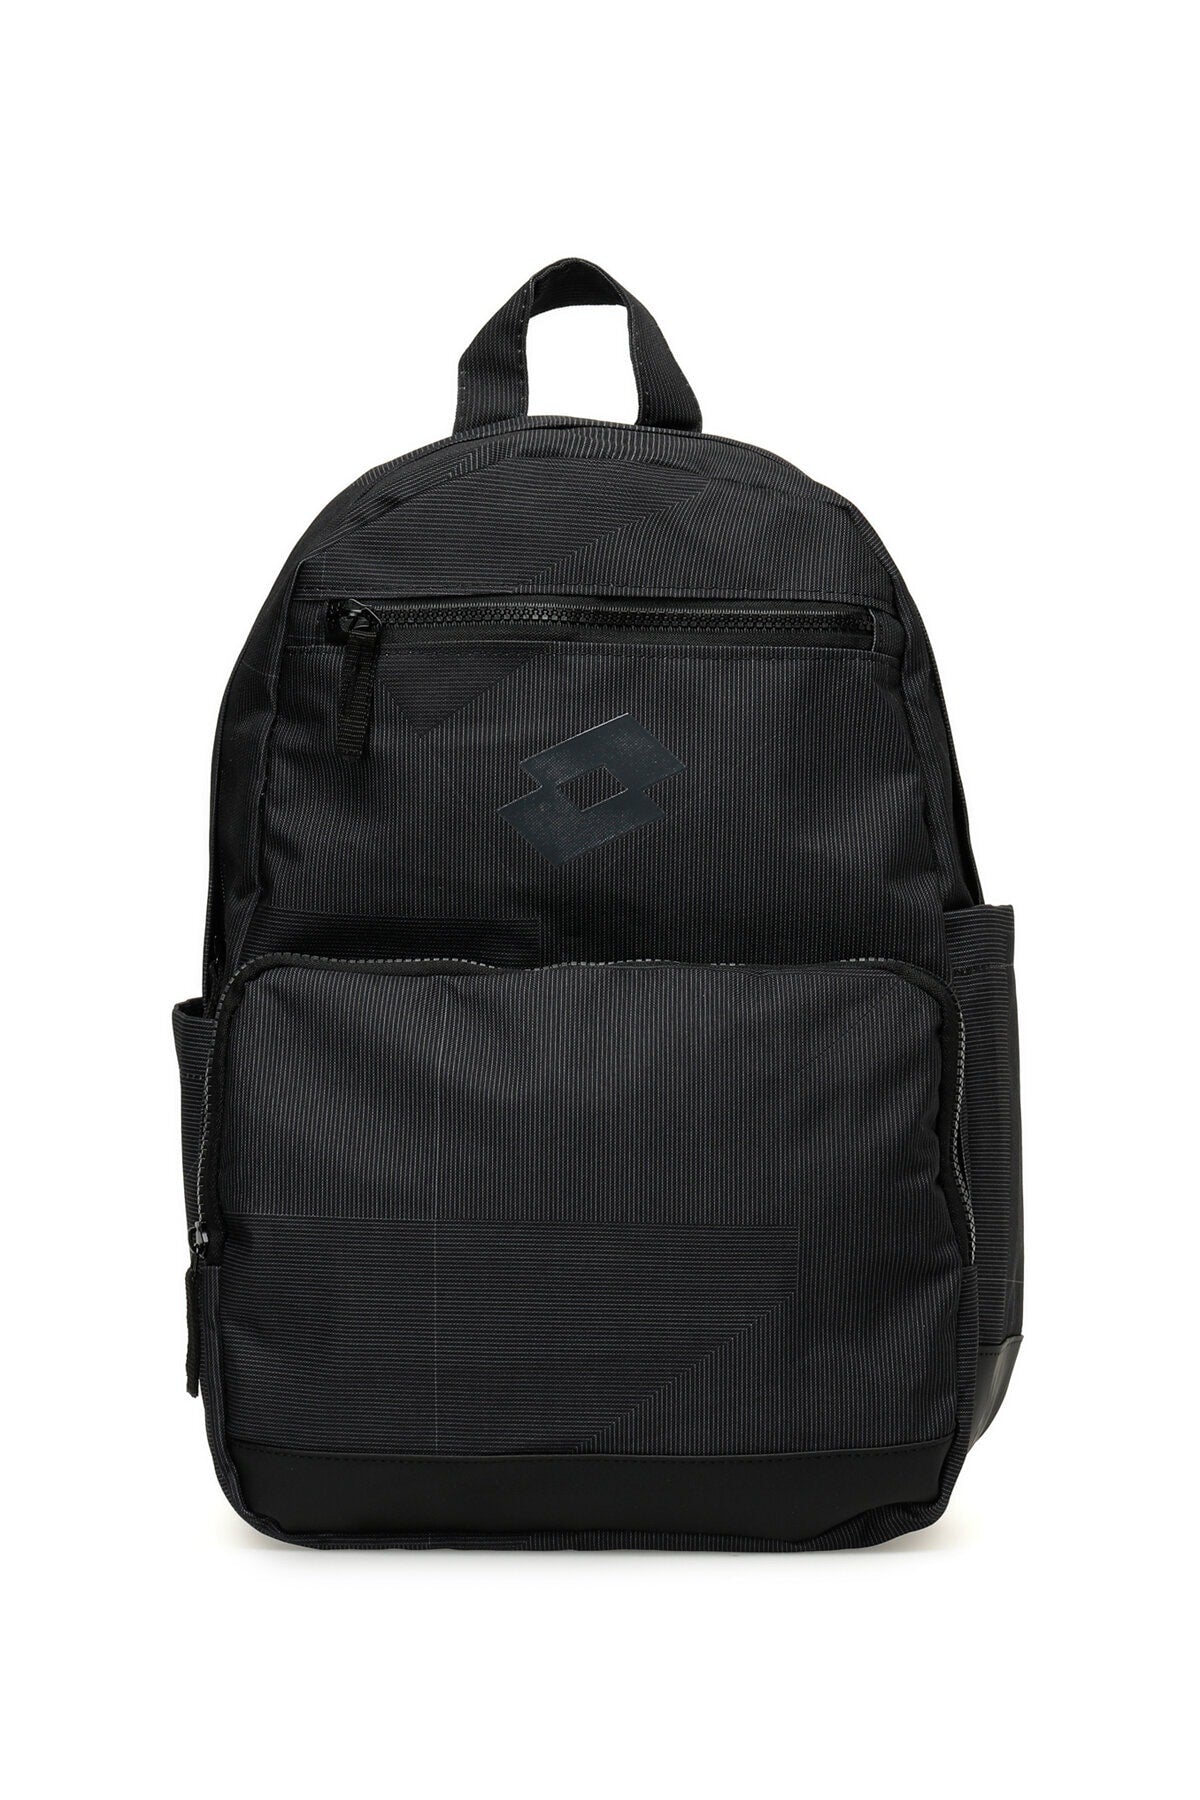 Ul Mood 35ltt53 3fx Black Unisex Backpack